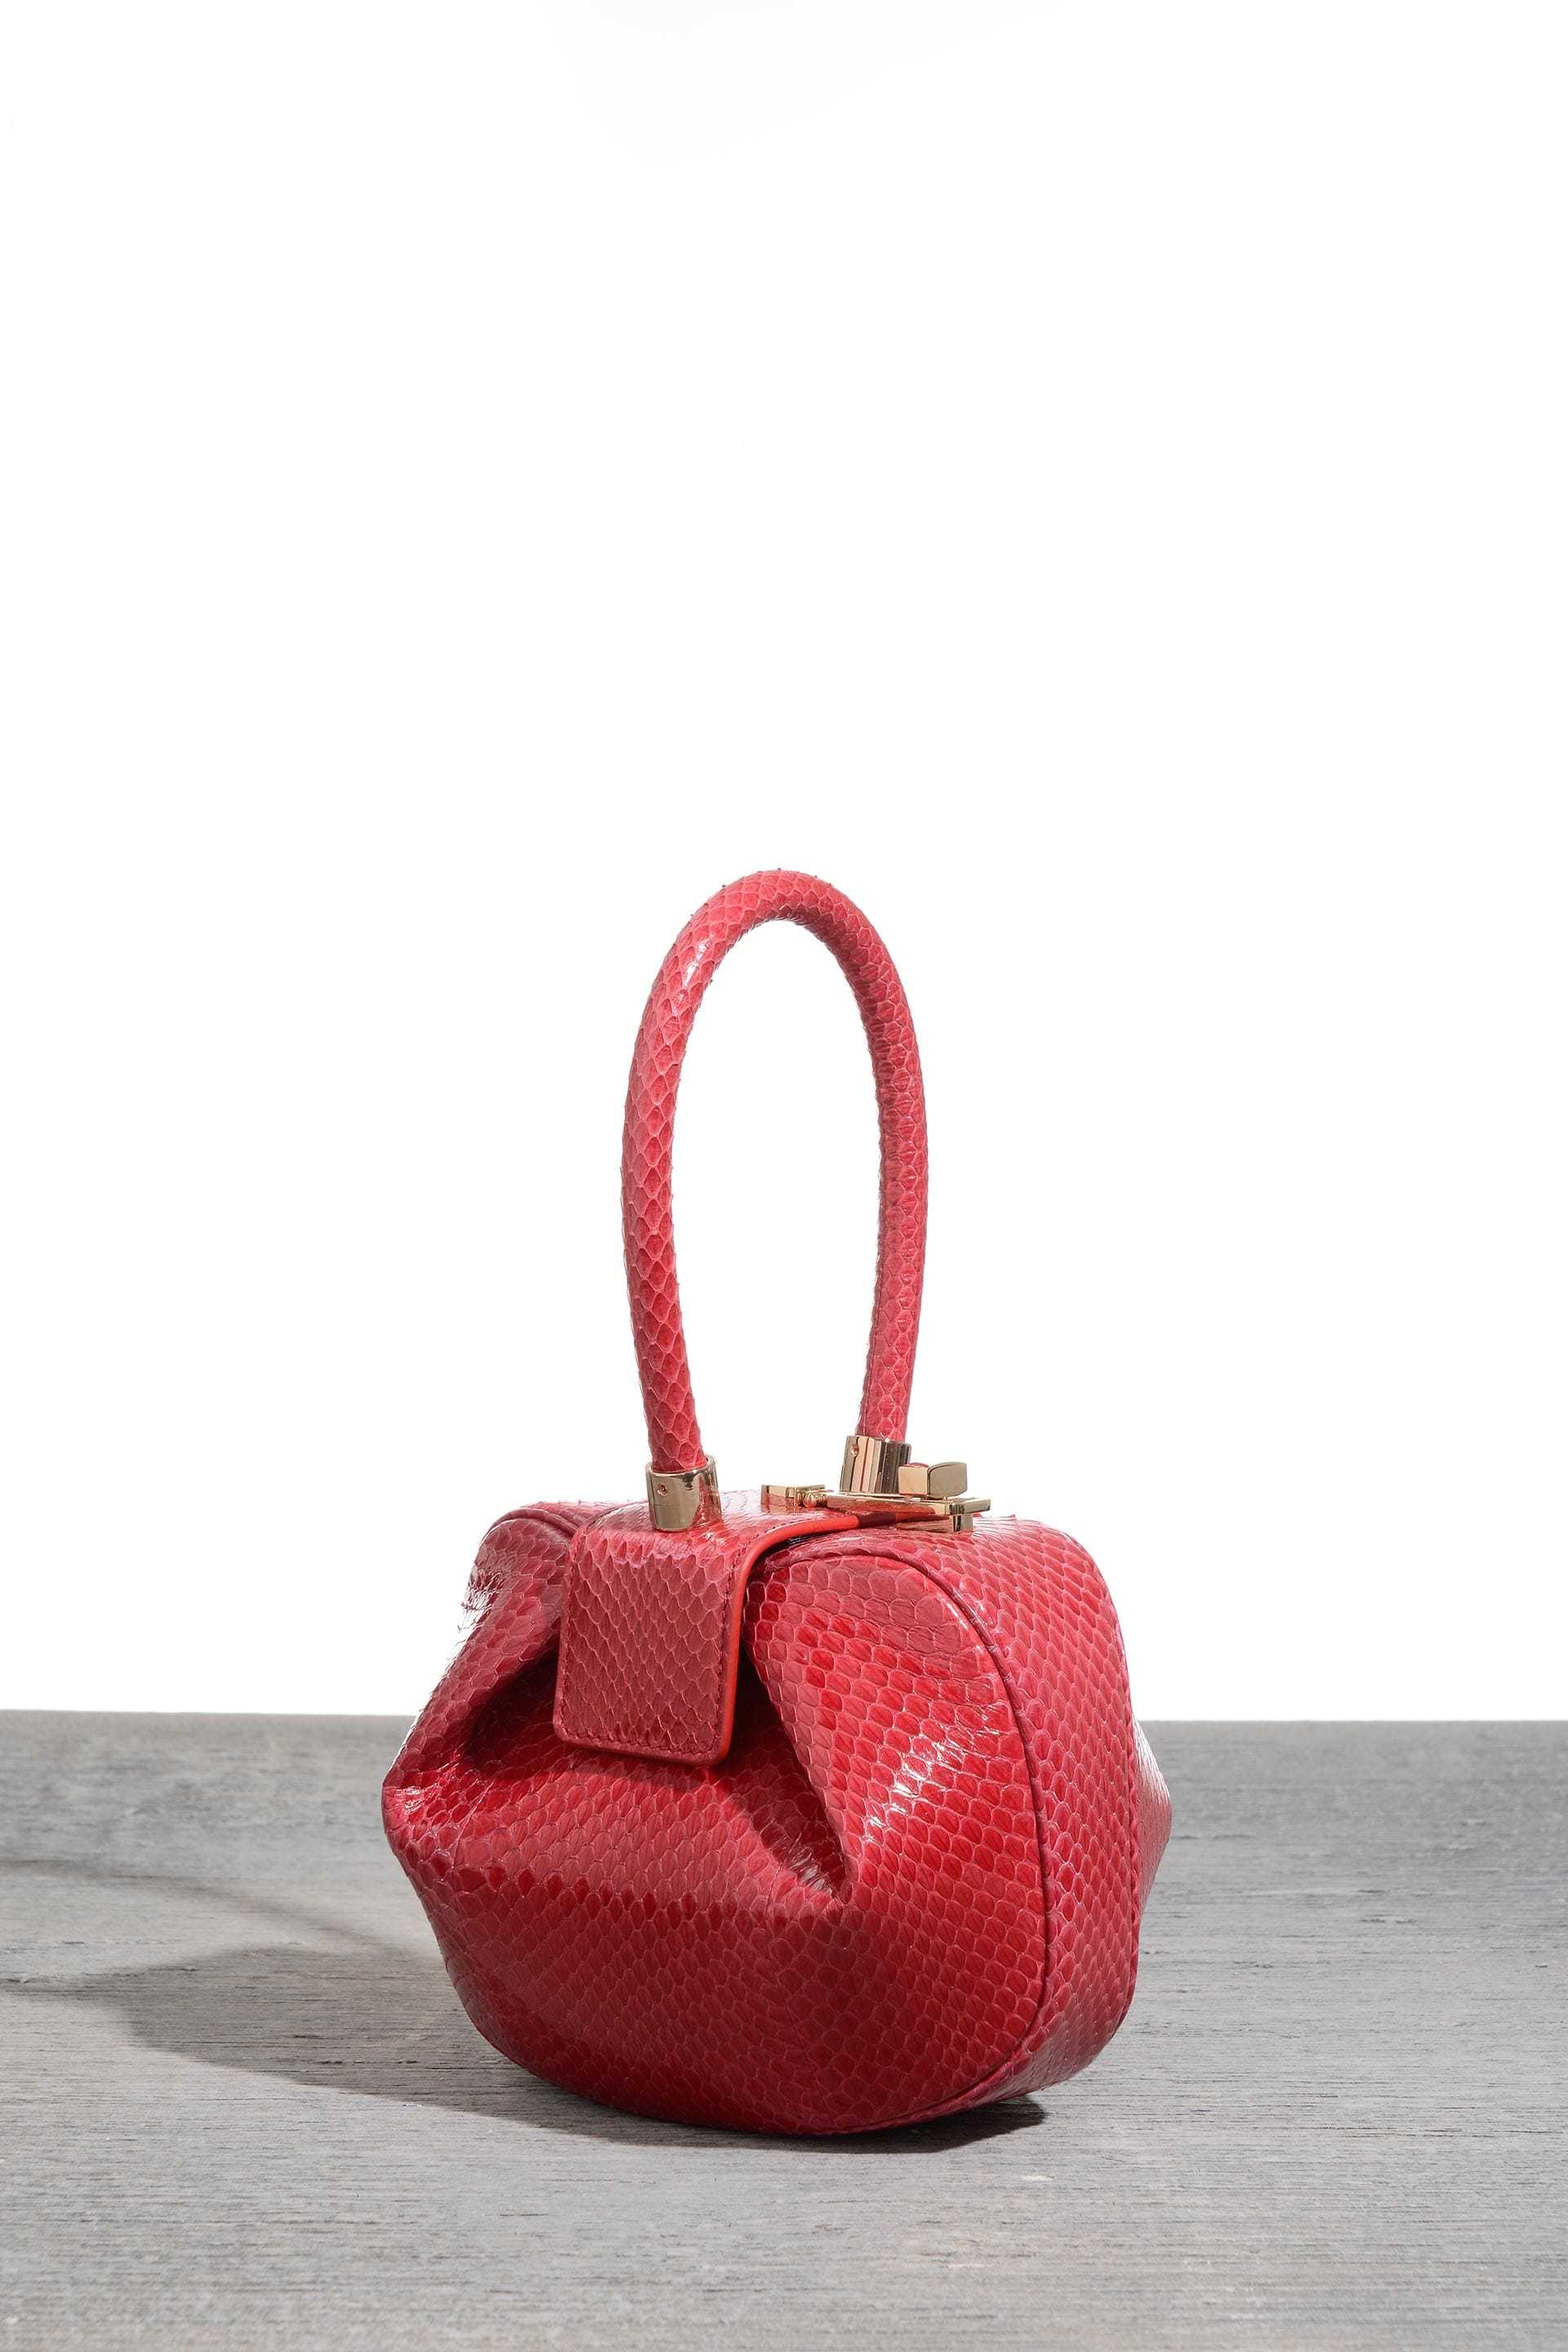  Demi bag in red snake, $2,495, at Net-a-Porter 